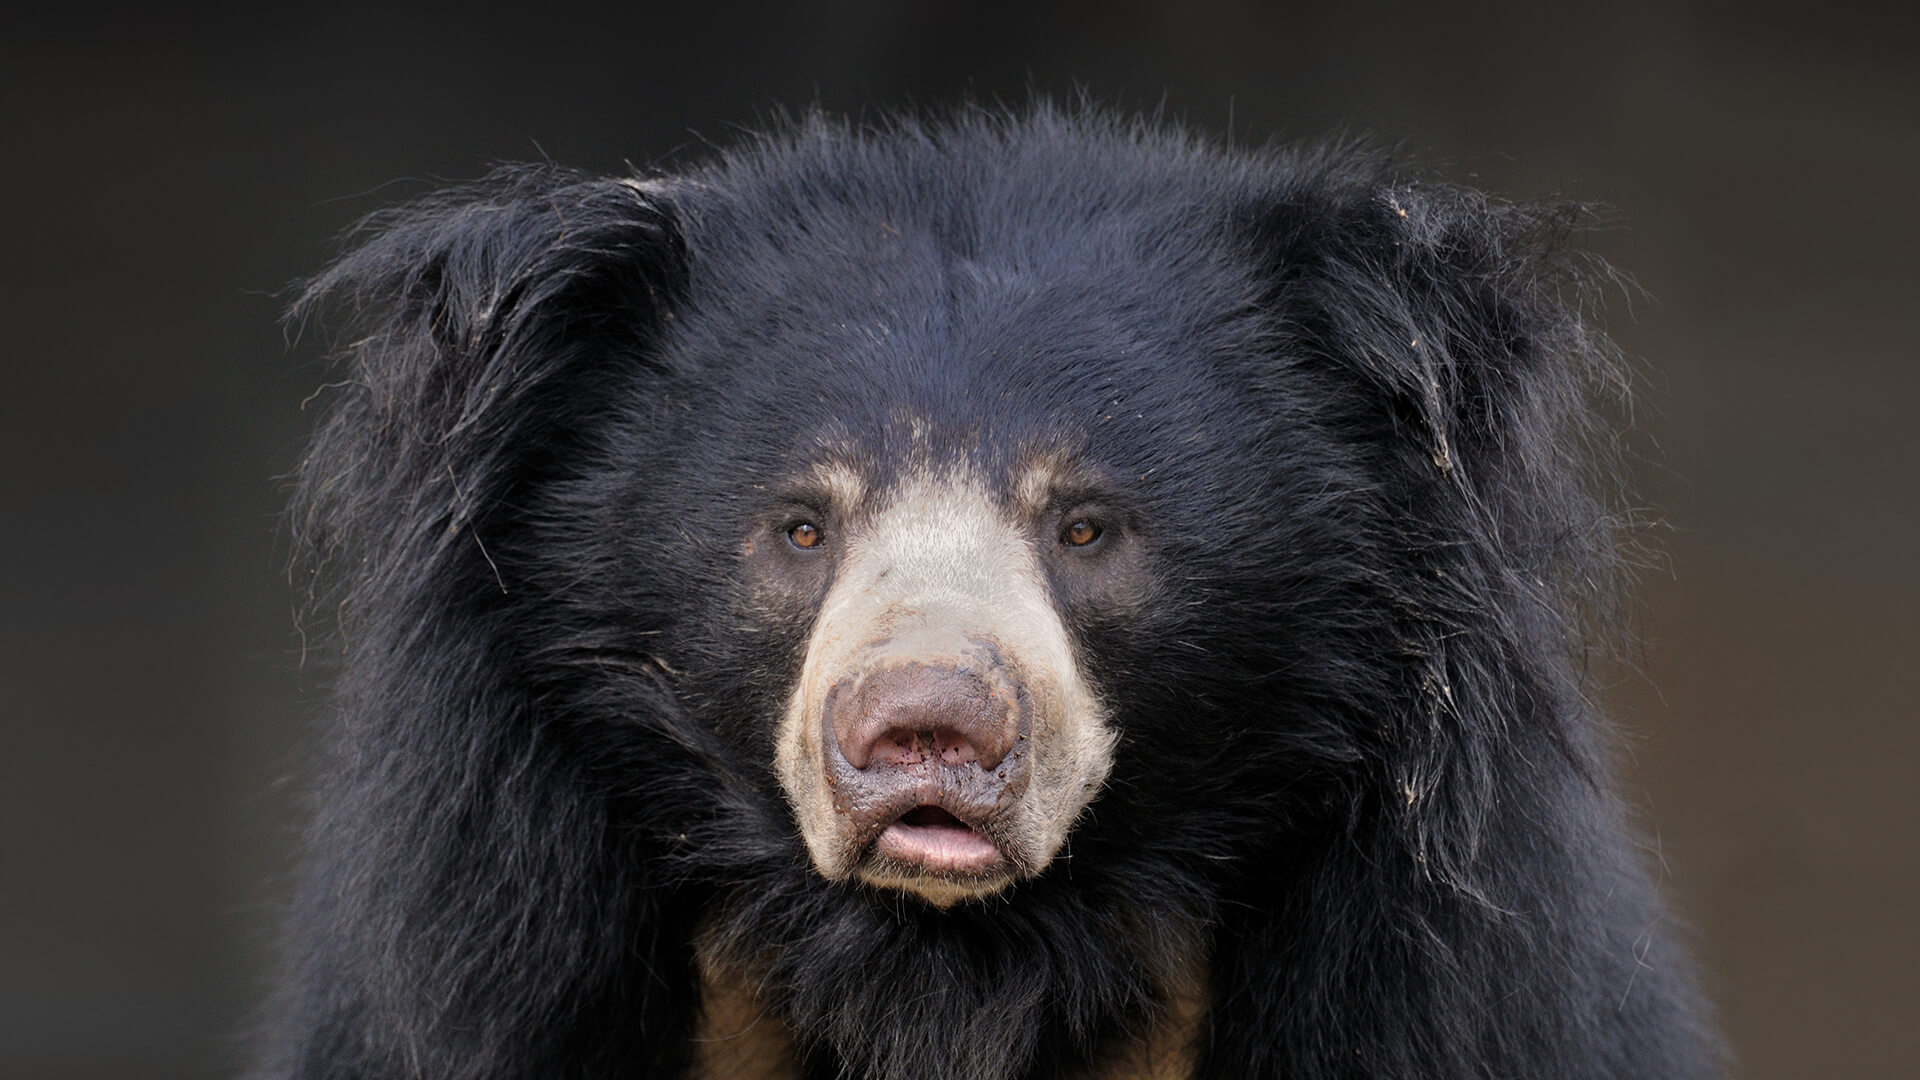 Closeup of a sloth bear's face straight on